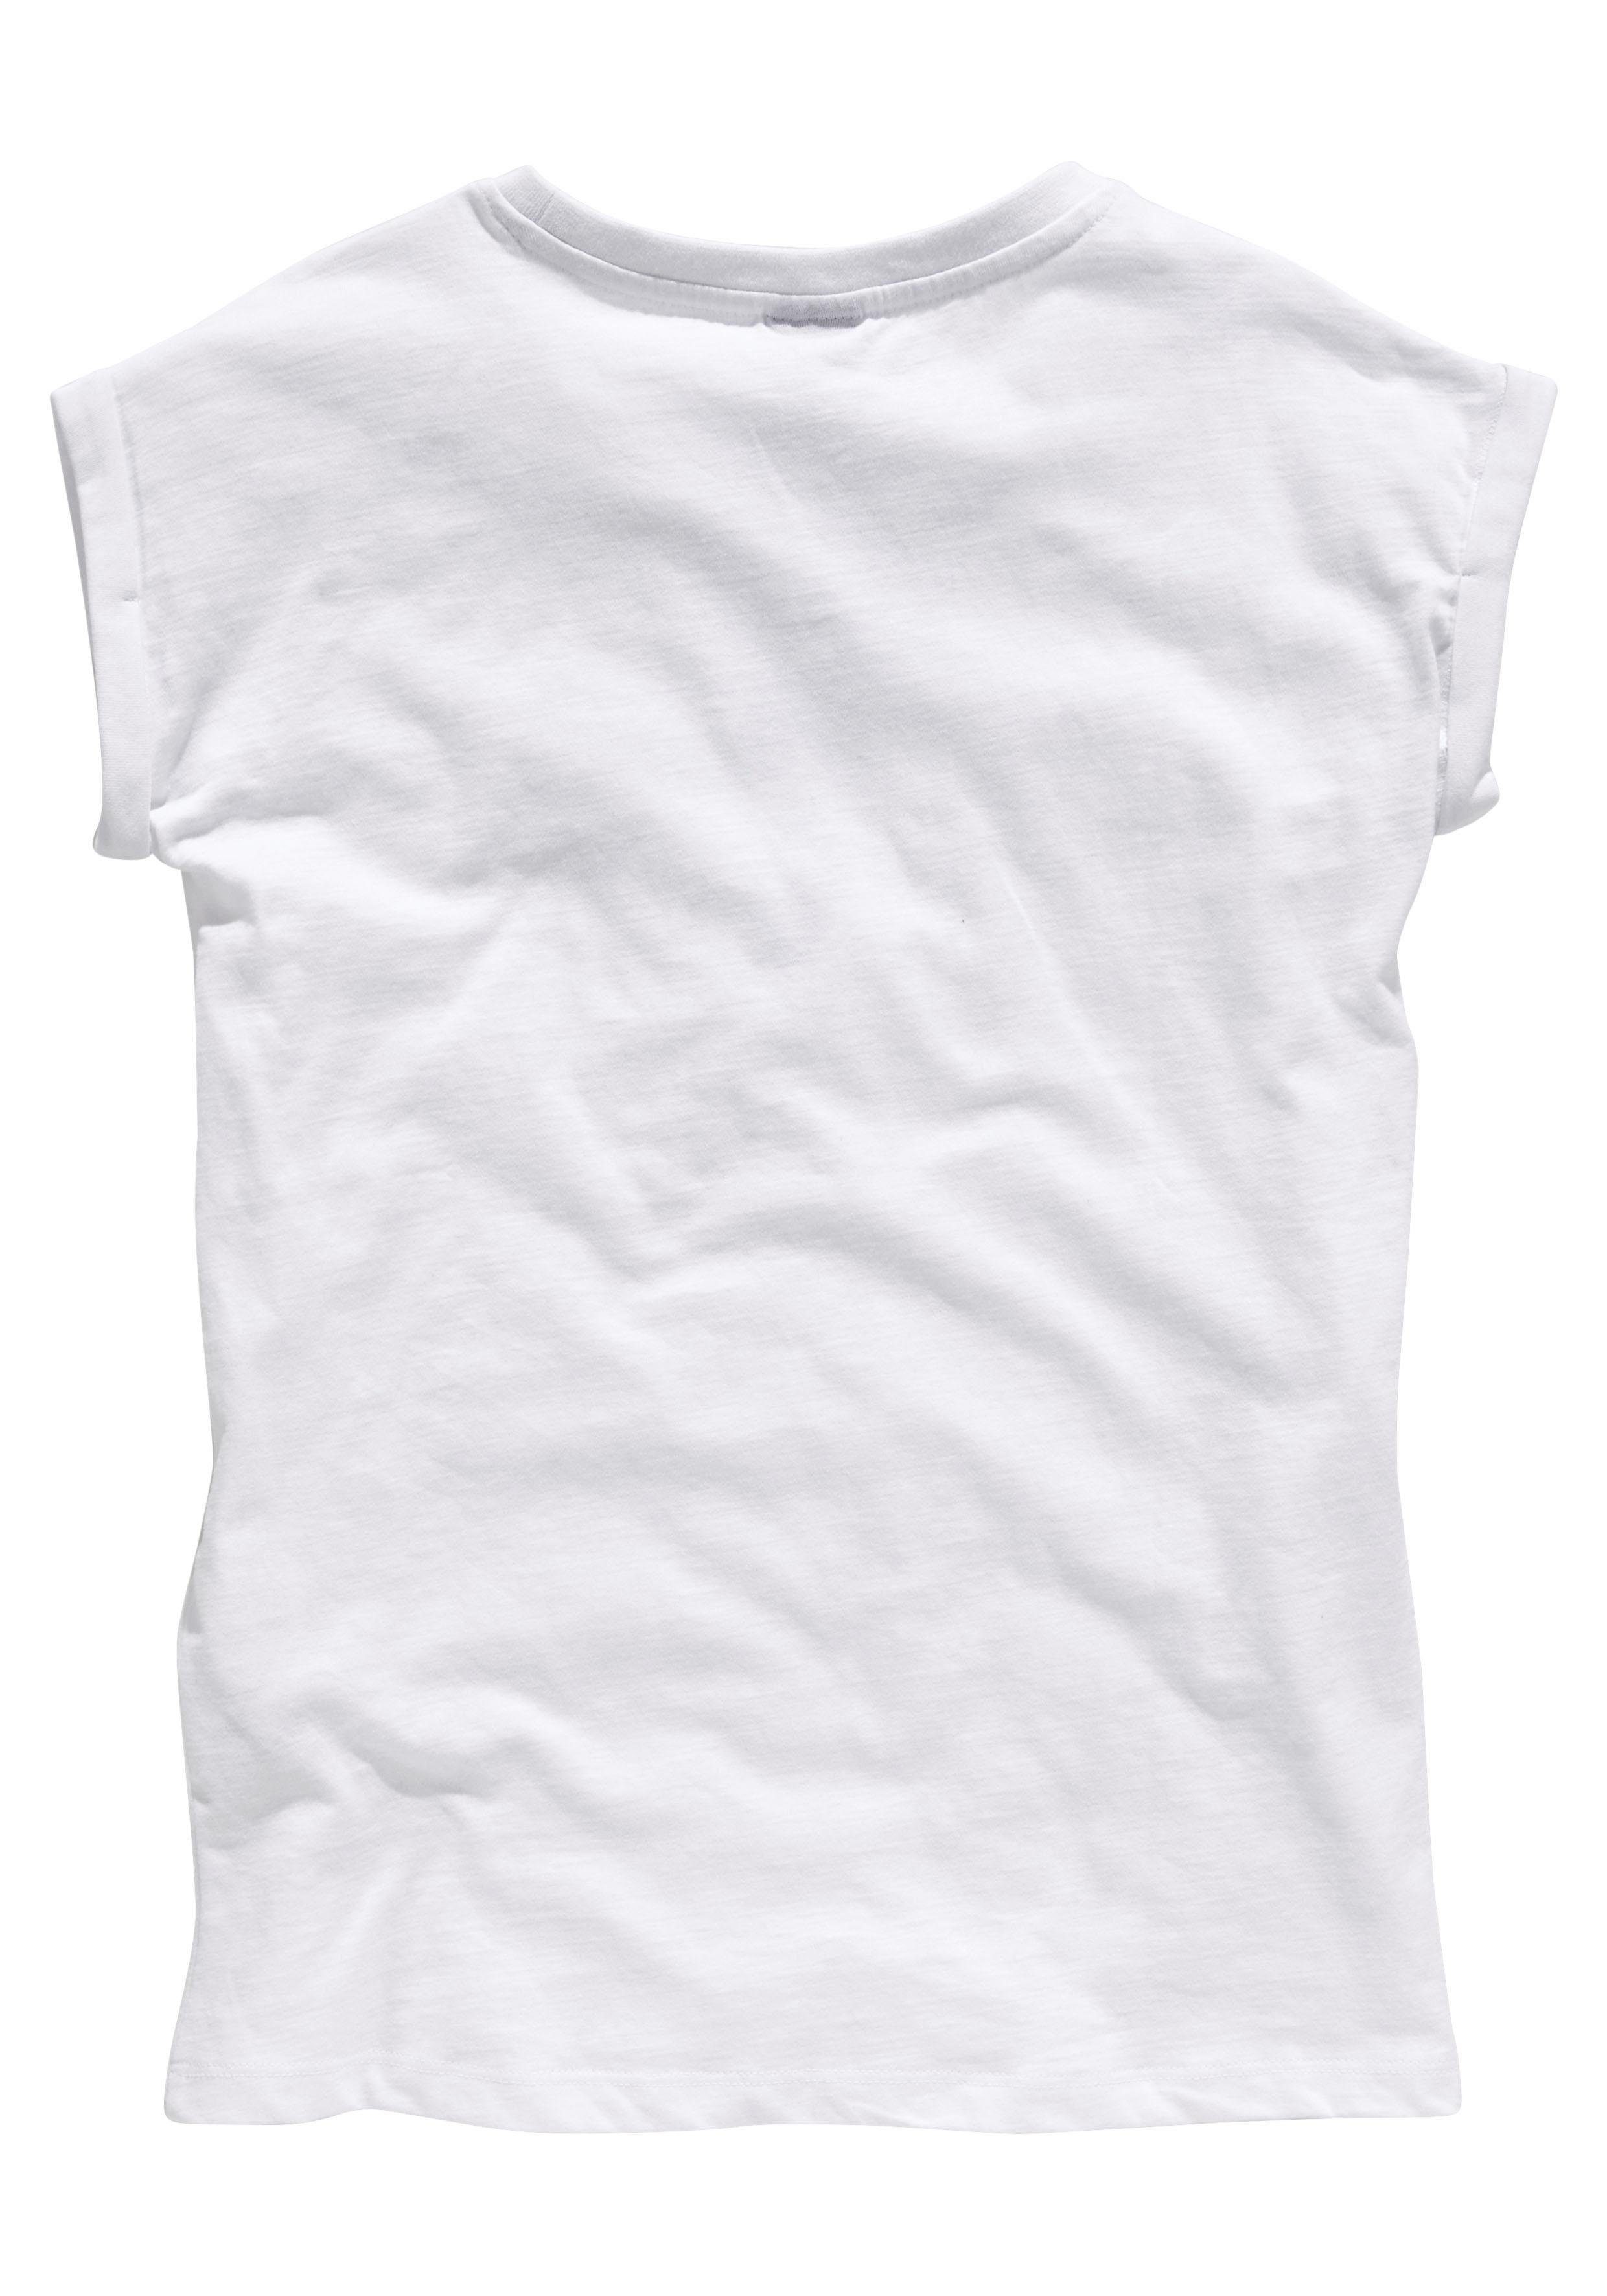 Bevor Du weiter in fragst: legerer Form KIDSWORLD T-Shirt NEIN!